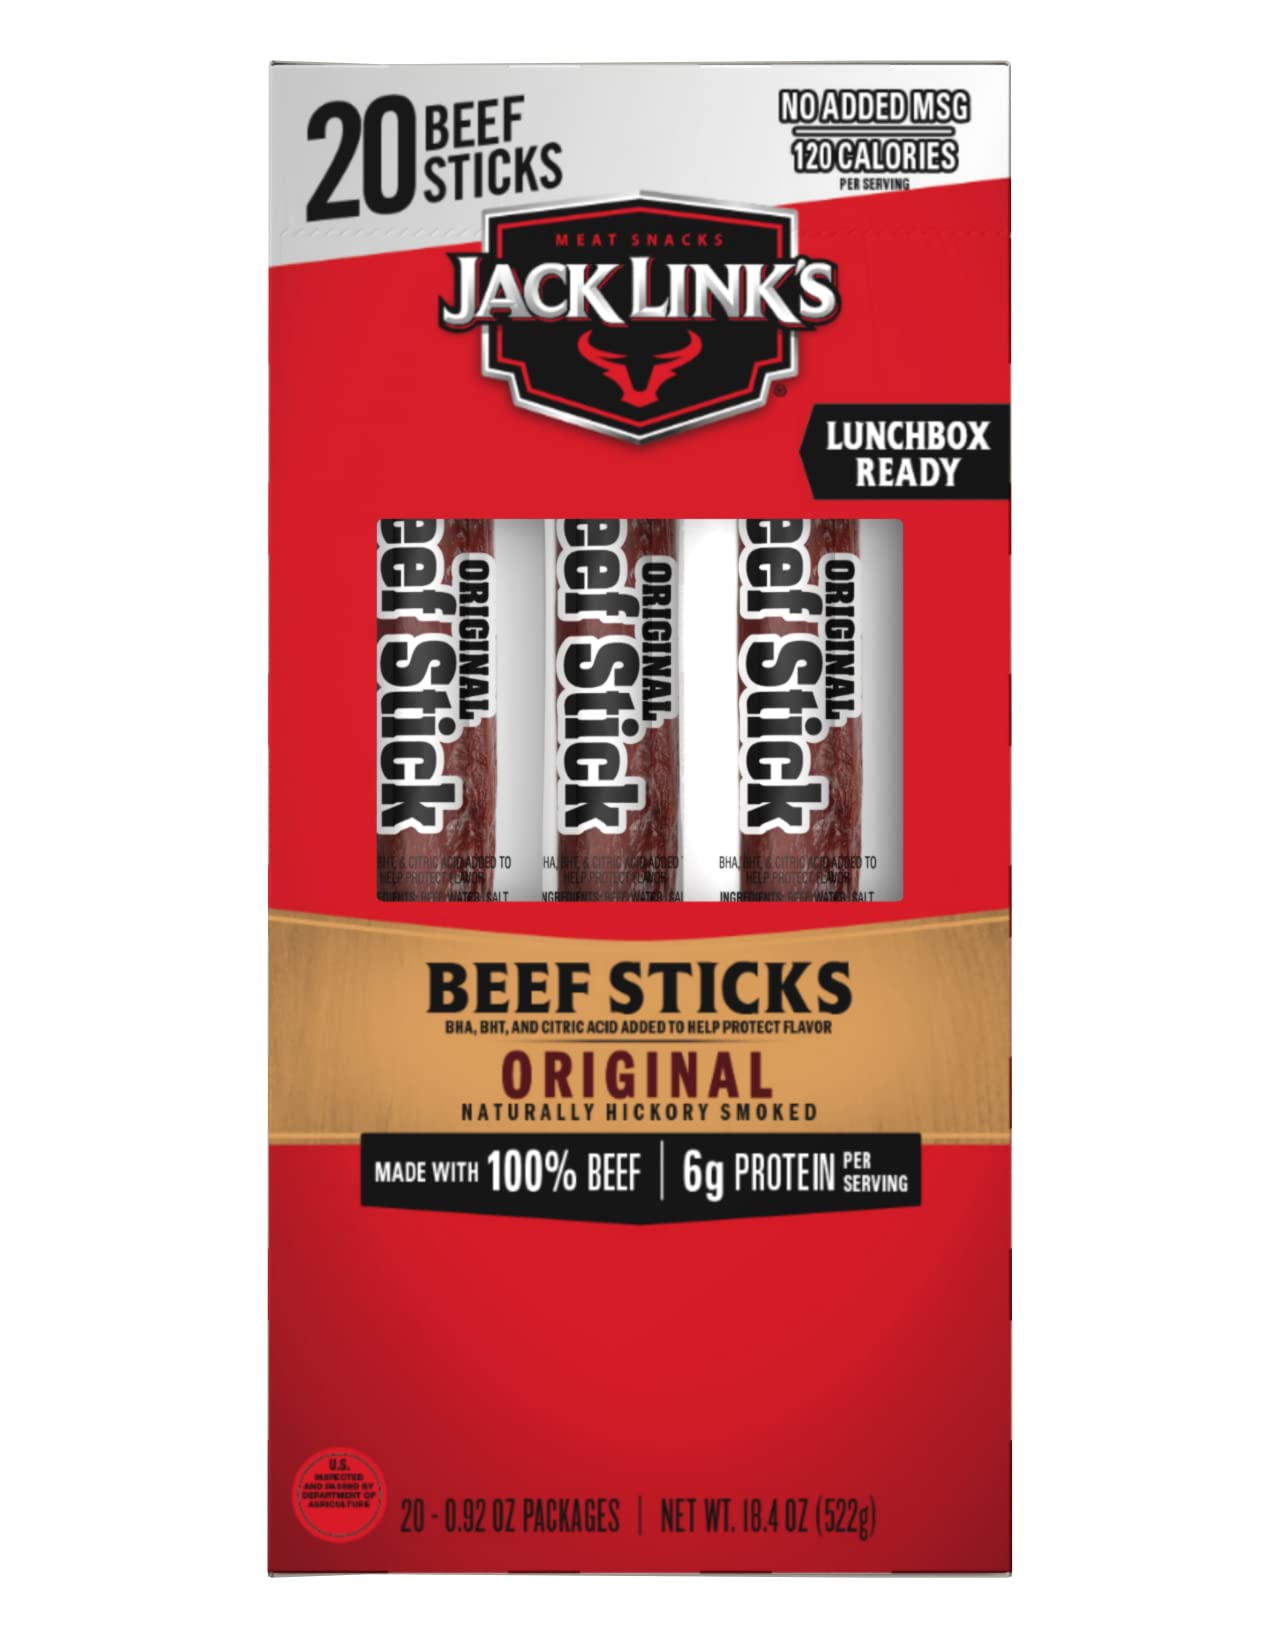 20-Count 0.92-Oz. Jack Link's Beef Sticks (Original) $8.46 w/ Subscribe & Save @ Amazon